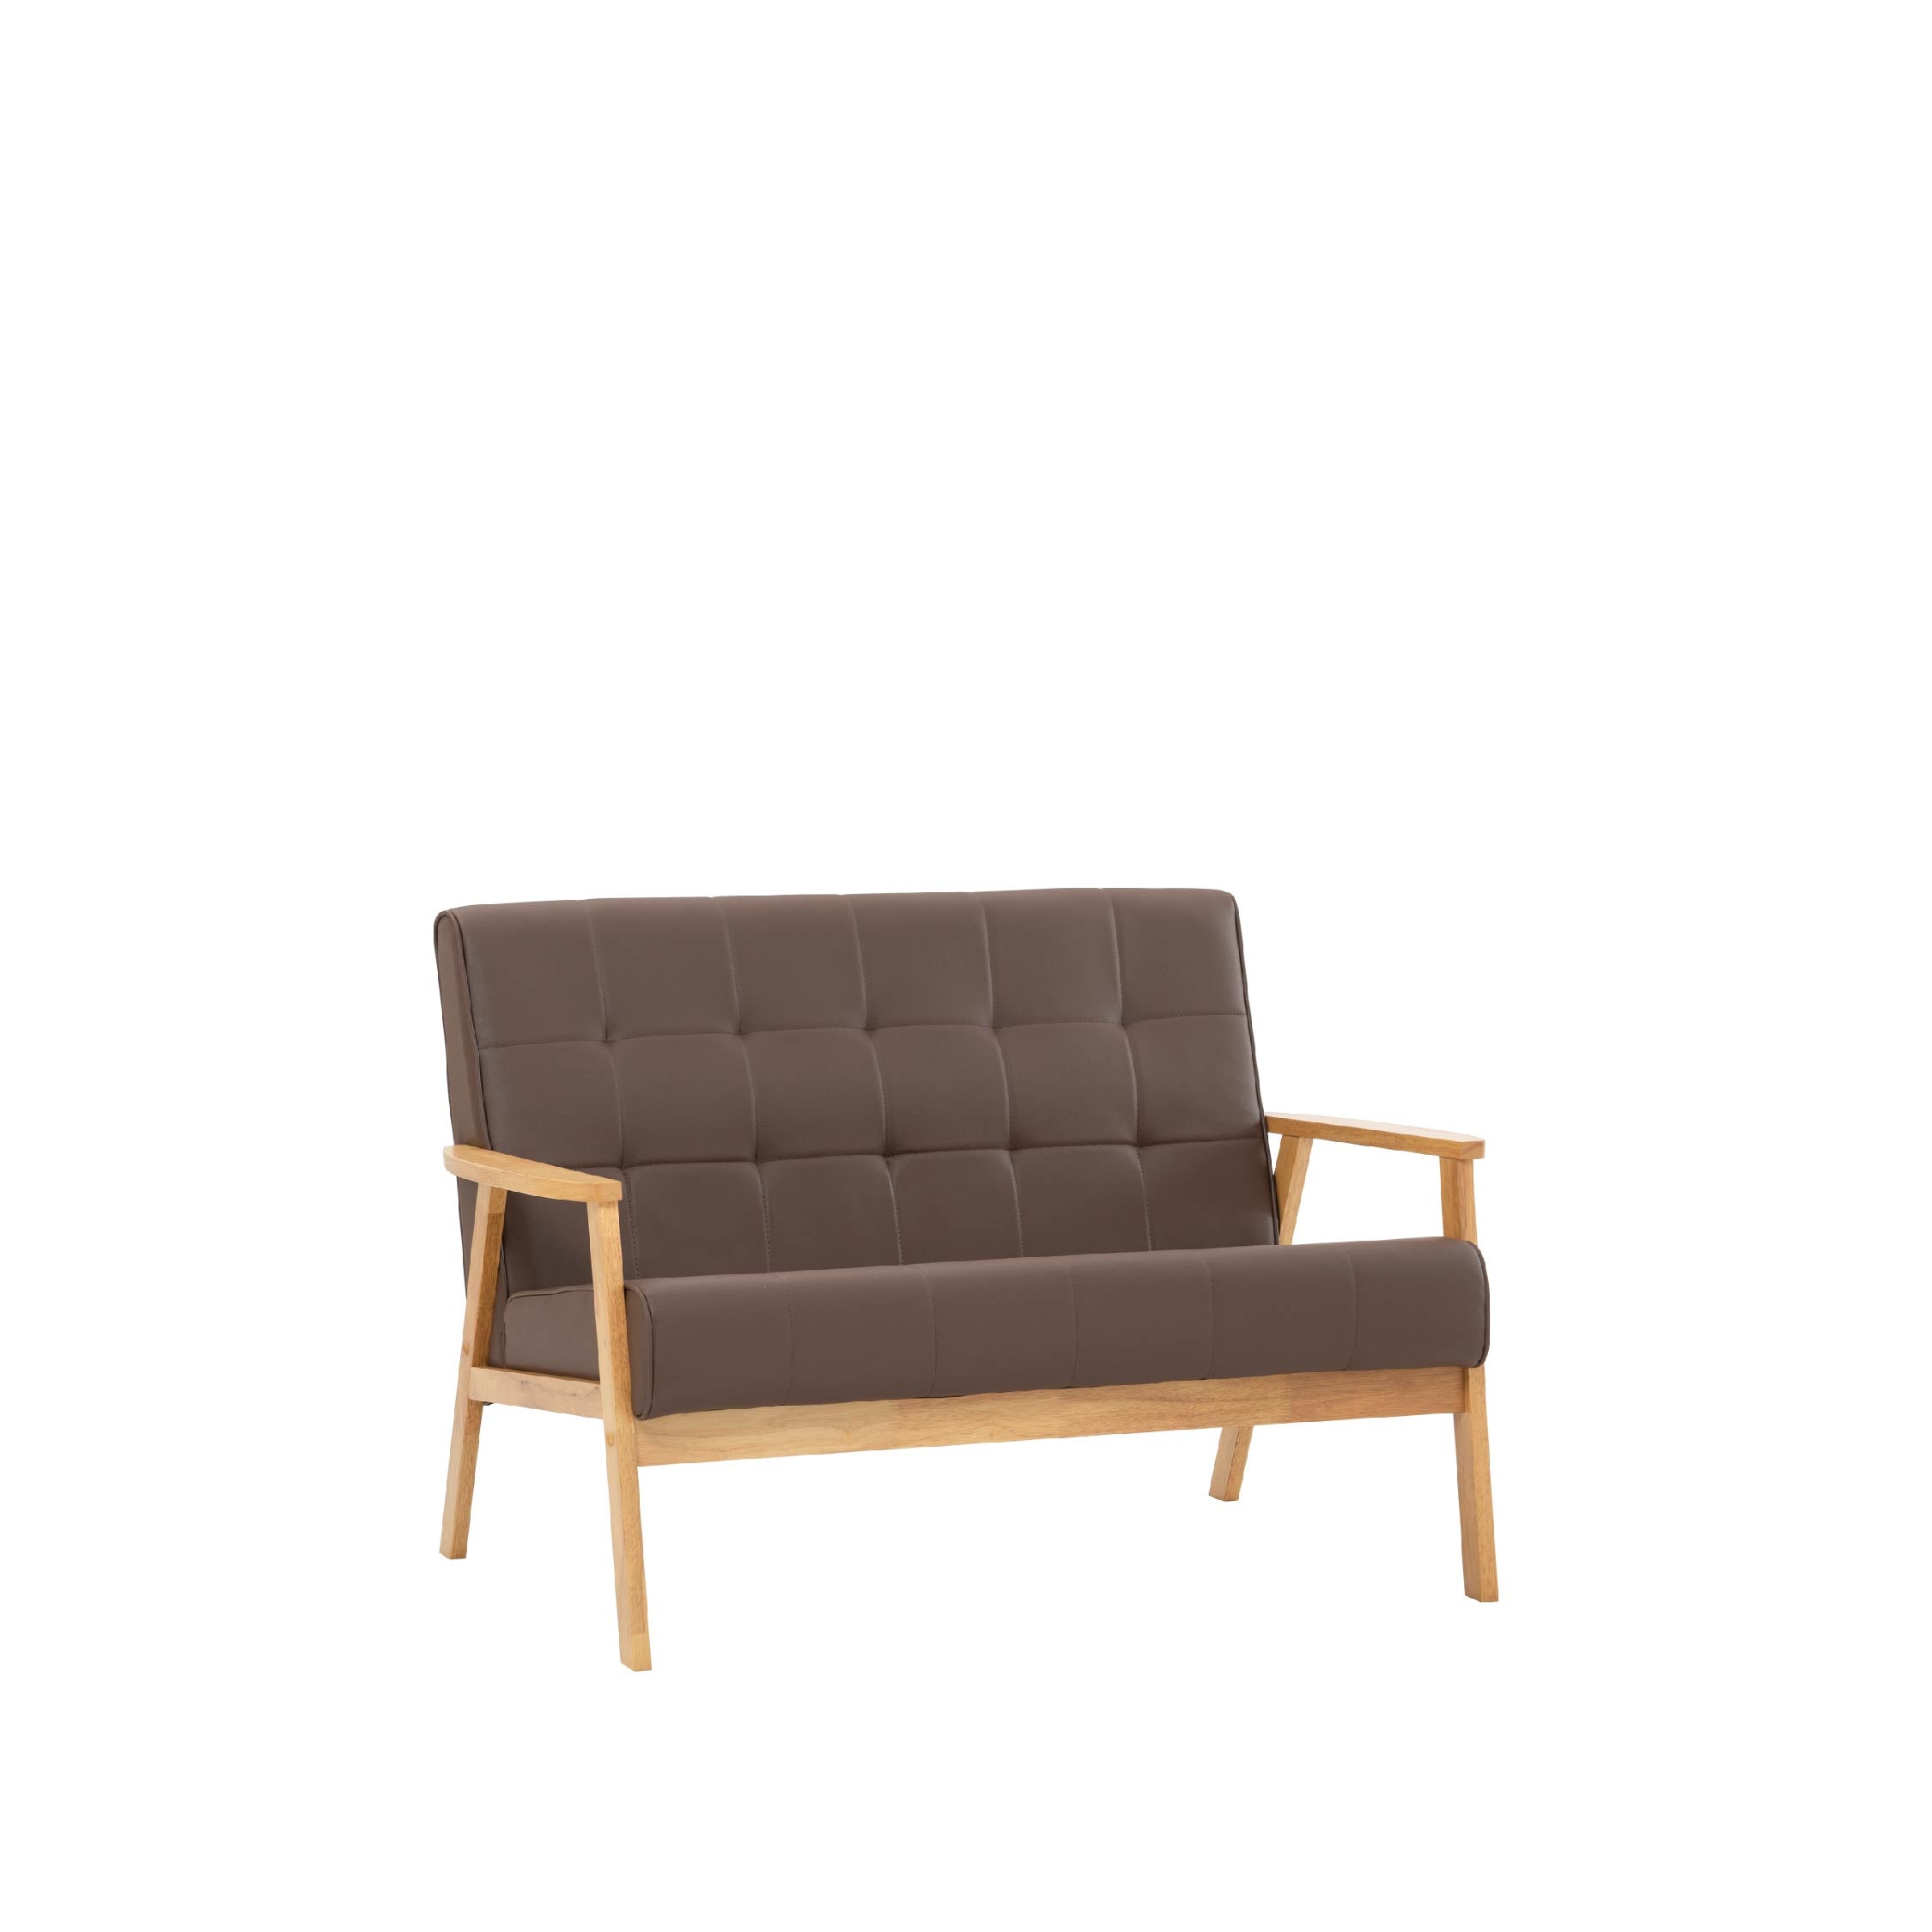 BASIC Sofa 2 Seater